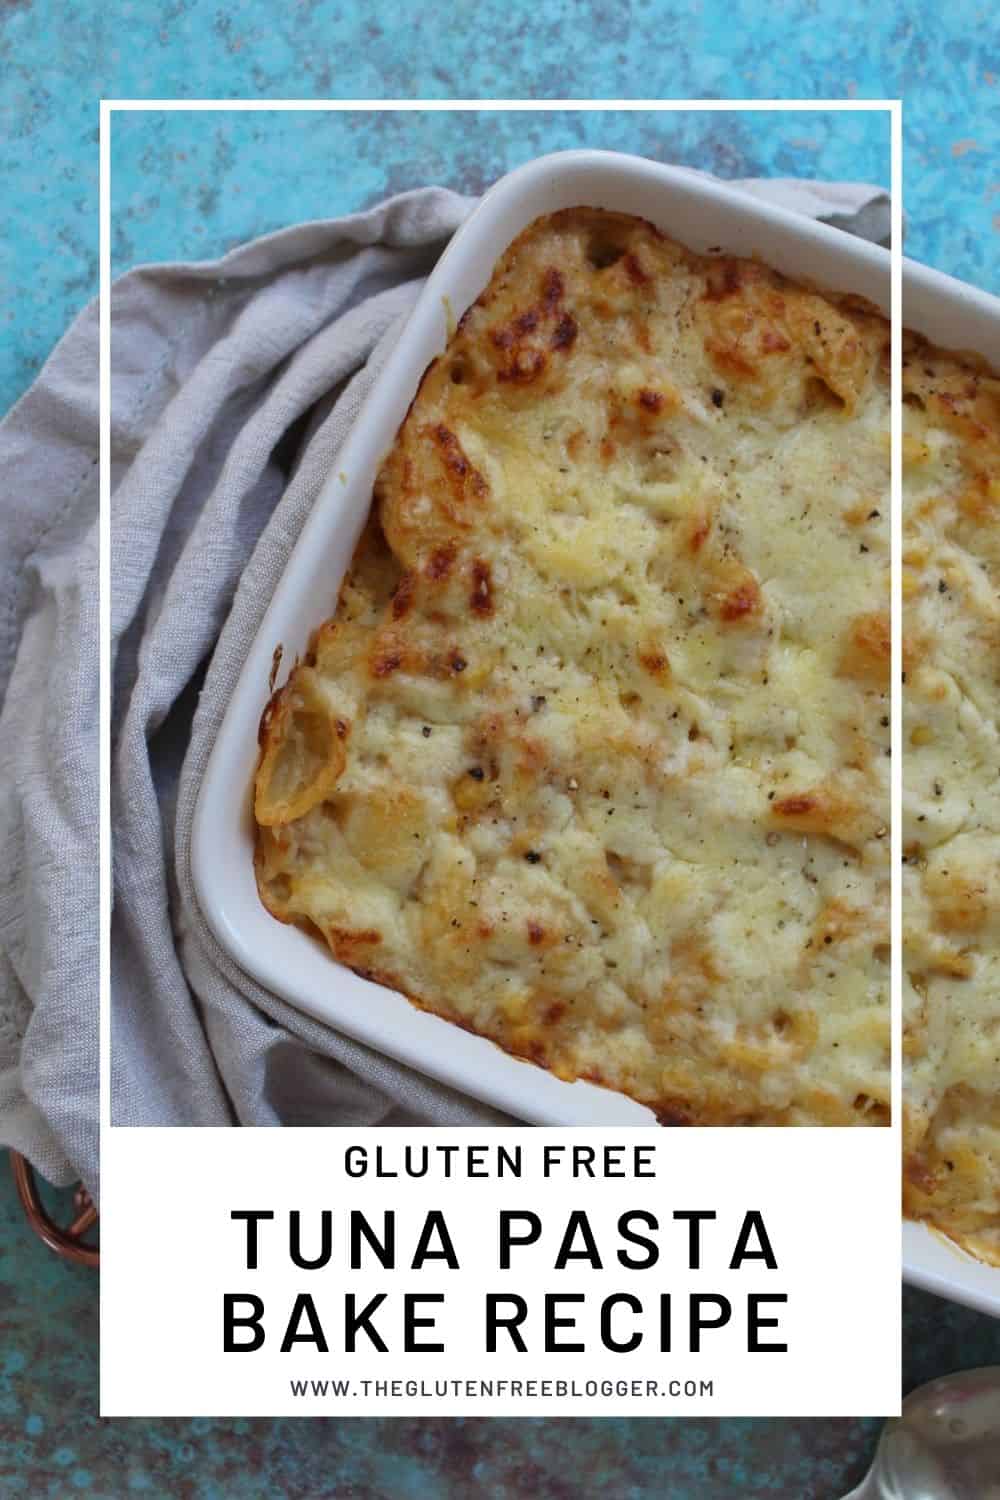 Gluten Free Tuna Pasta Bake Recipe - Budget Meal Ideas